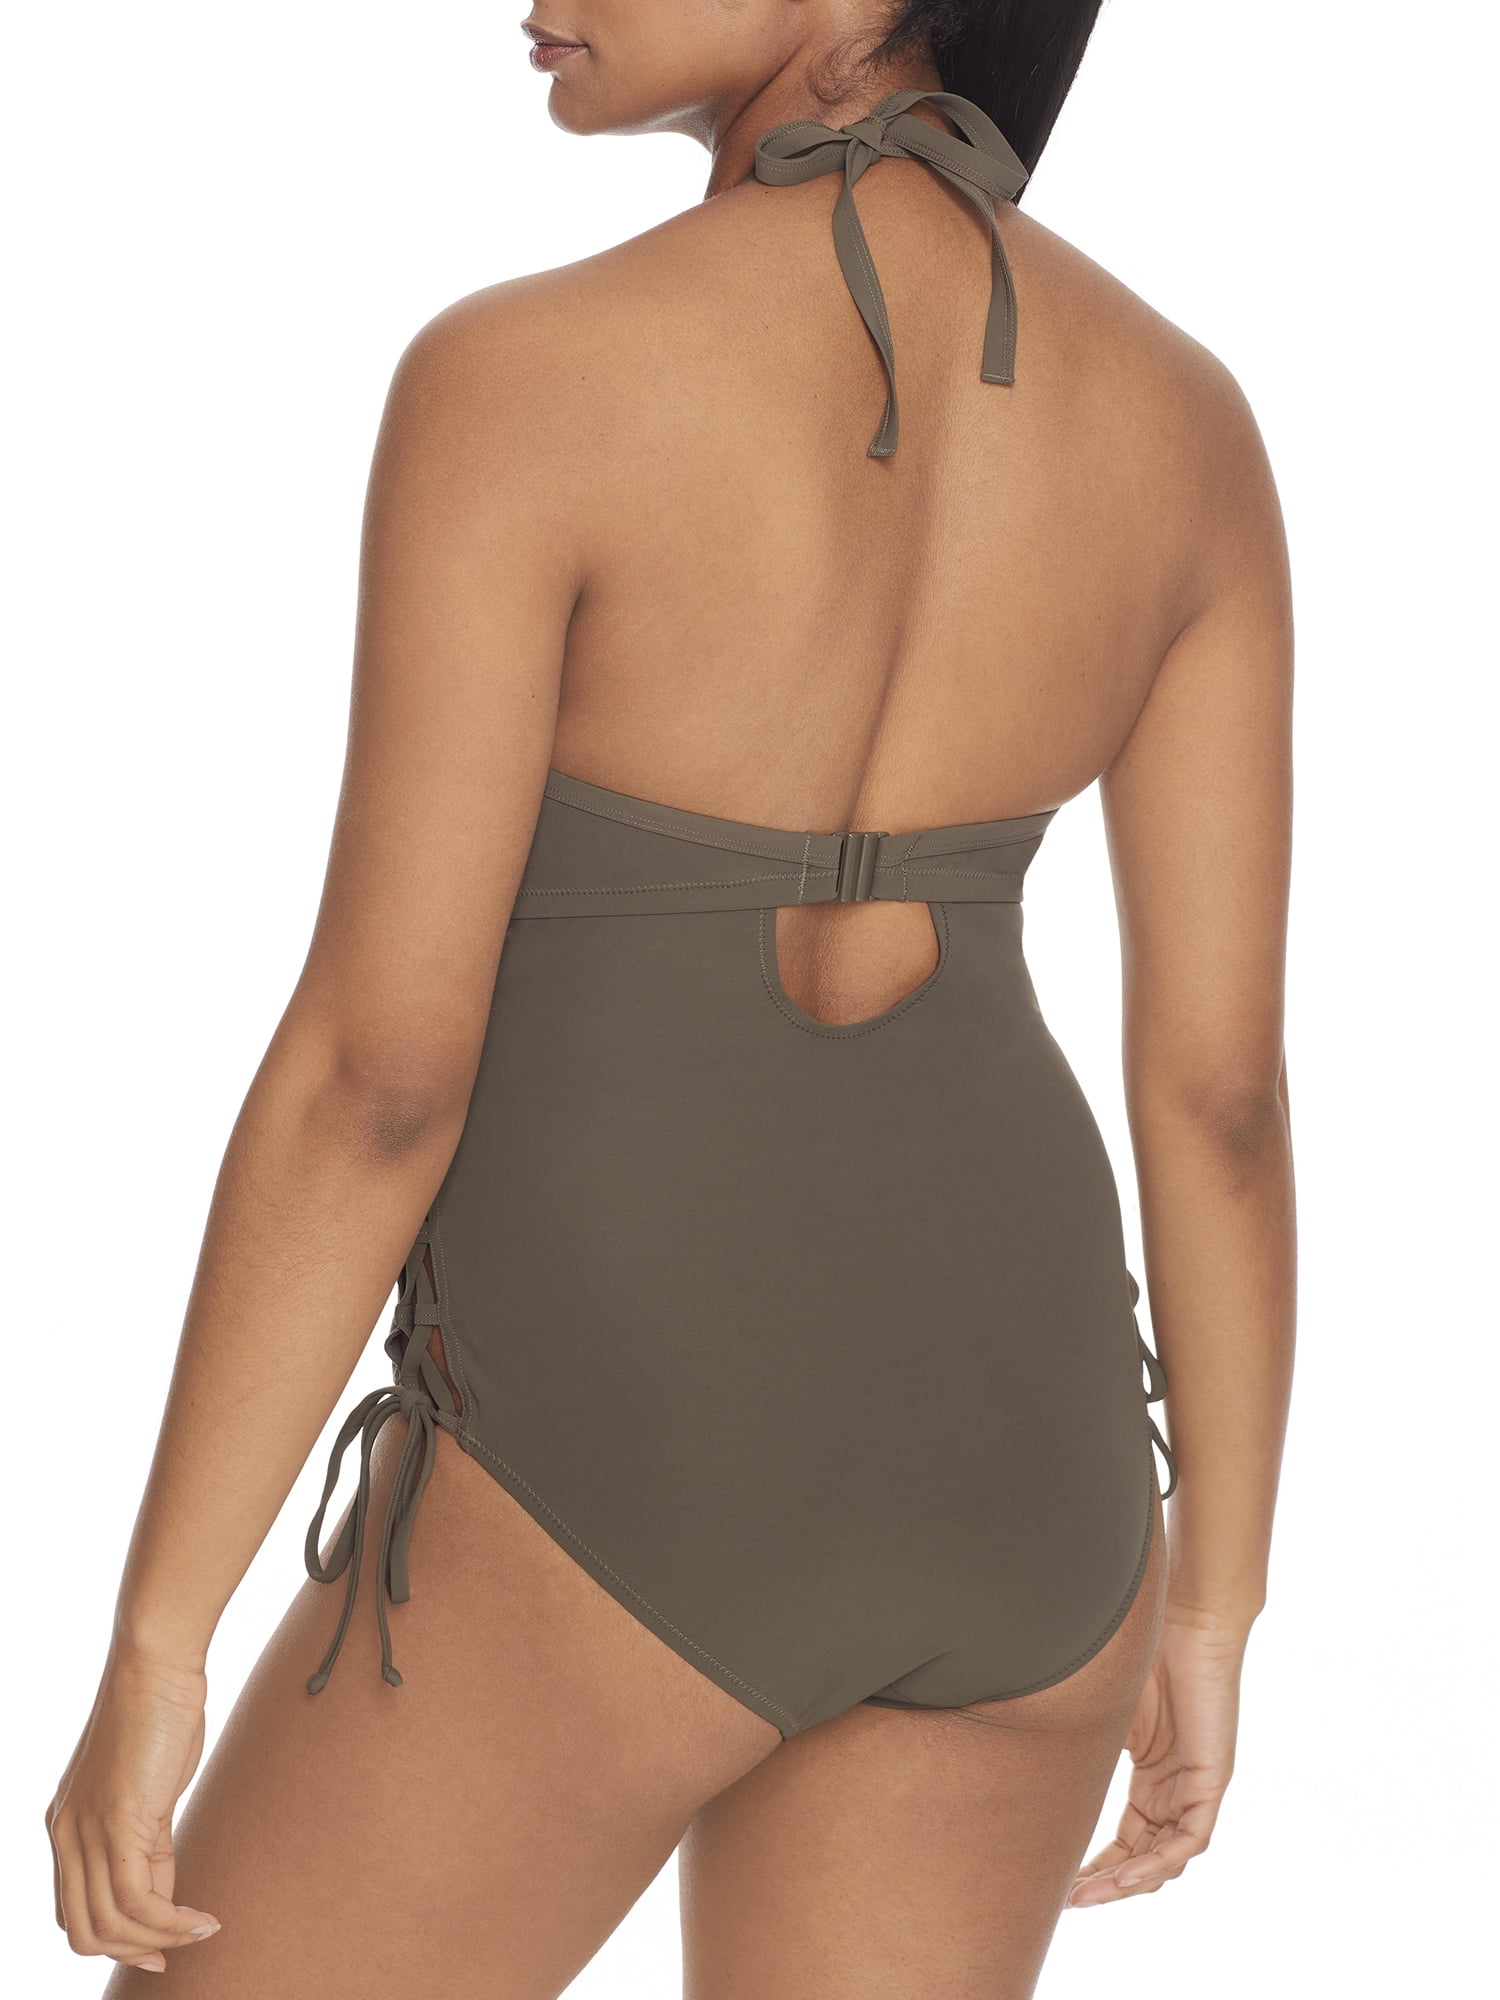 Miss Mandalay OLIVE Icon Underwire One-Piece Swimsuit, US 36G, UK 36F 